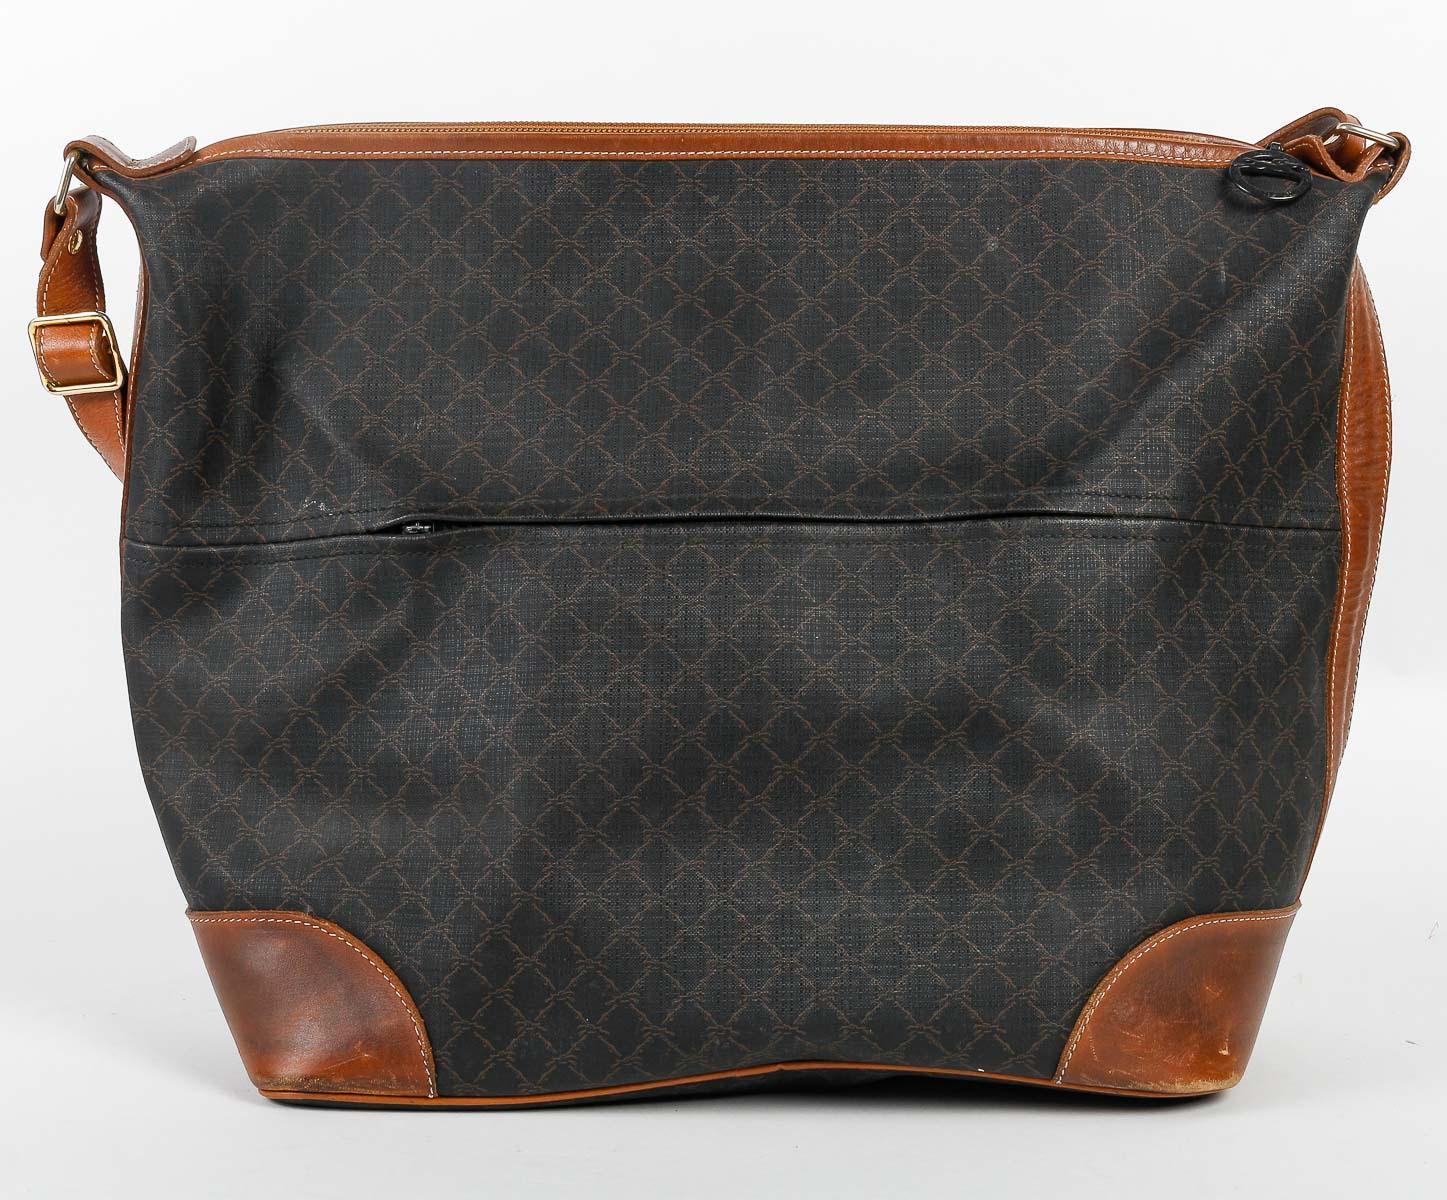 Handbag, Longchamp, Large size, 20th century.

Handbag, Longchamp, Large size, brown leather with print, XXth century.    
h: 33cm , w: 43cm, d: 17cm